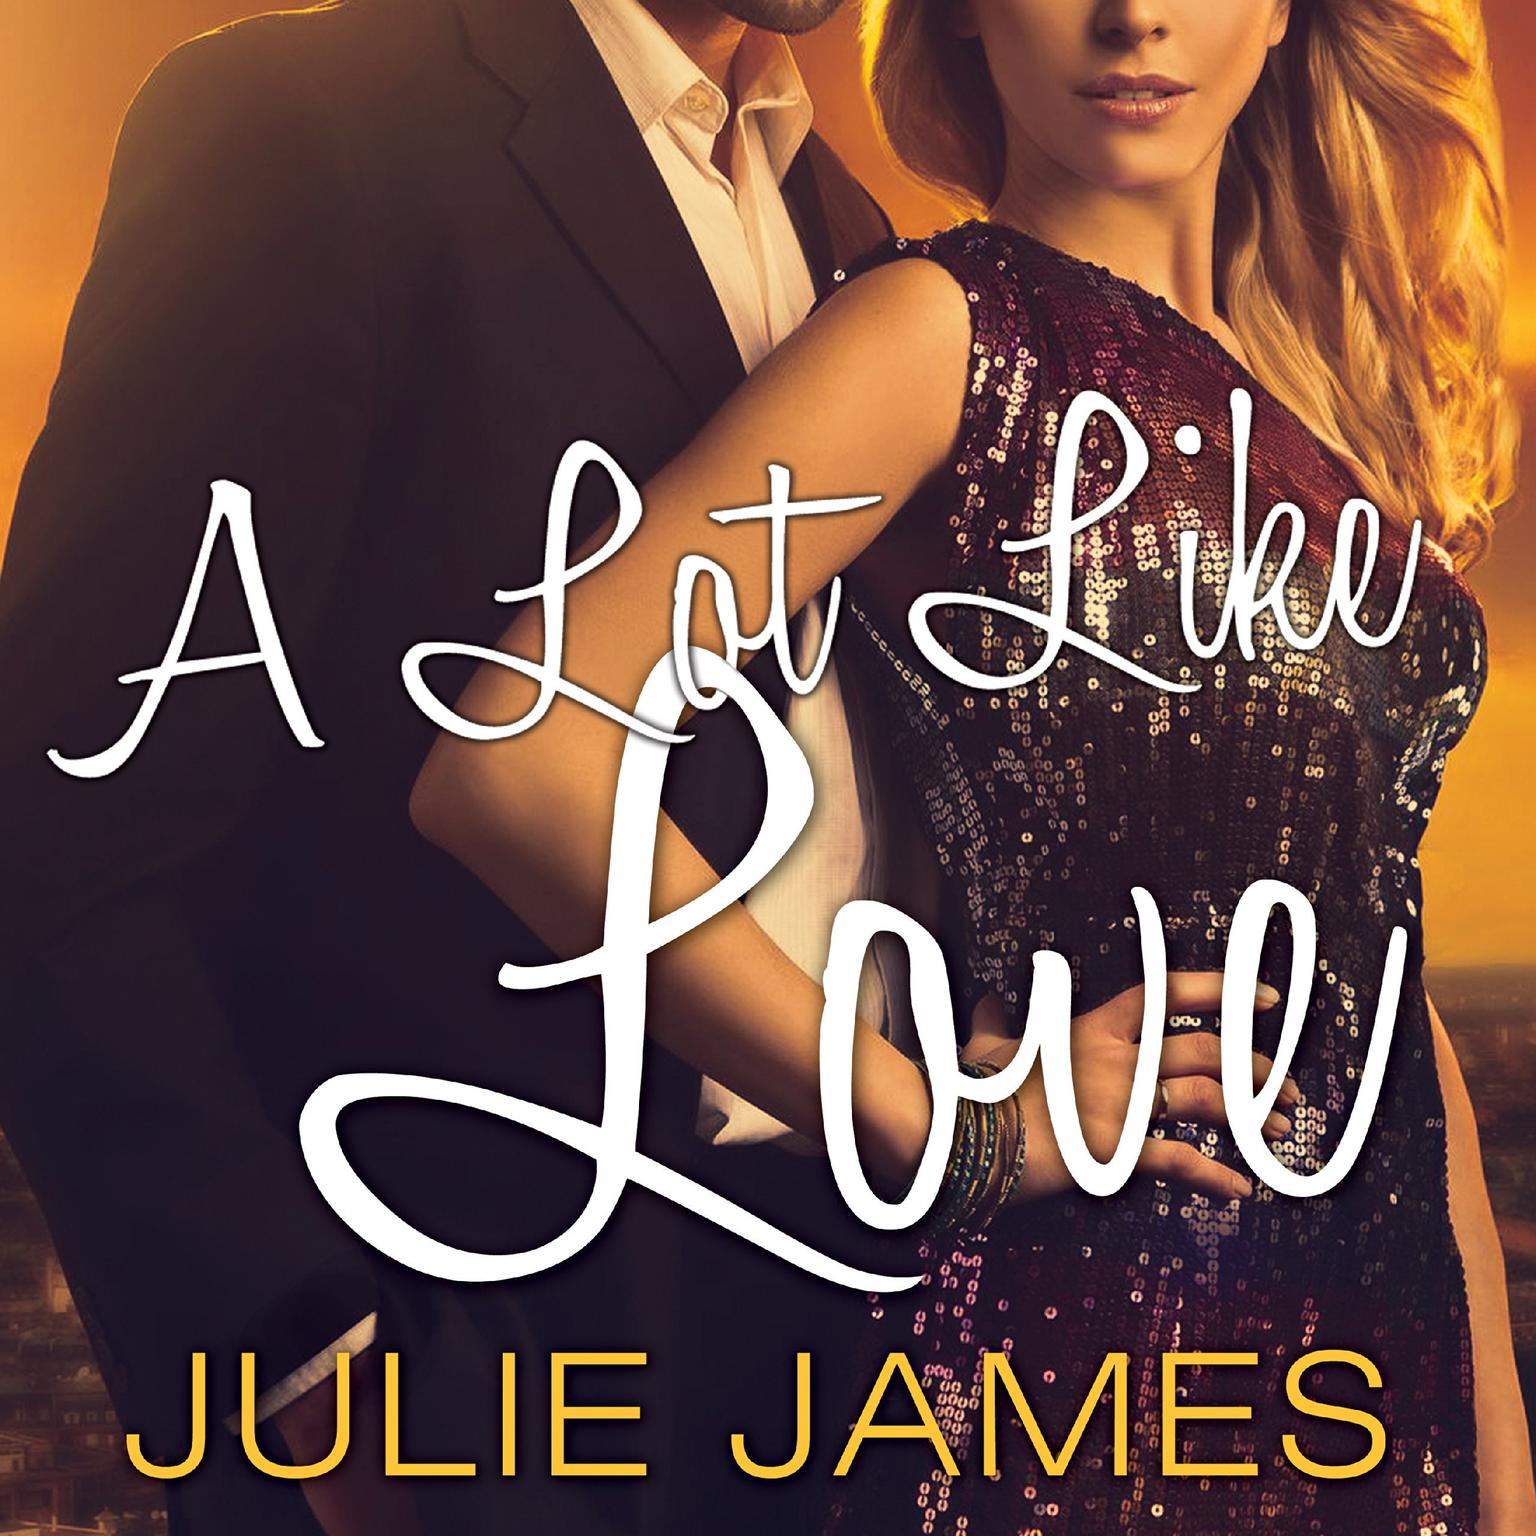 A Lot Like Love Audiobook, by Julie James